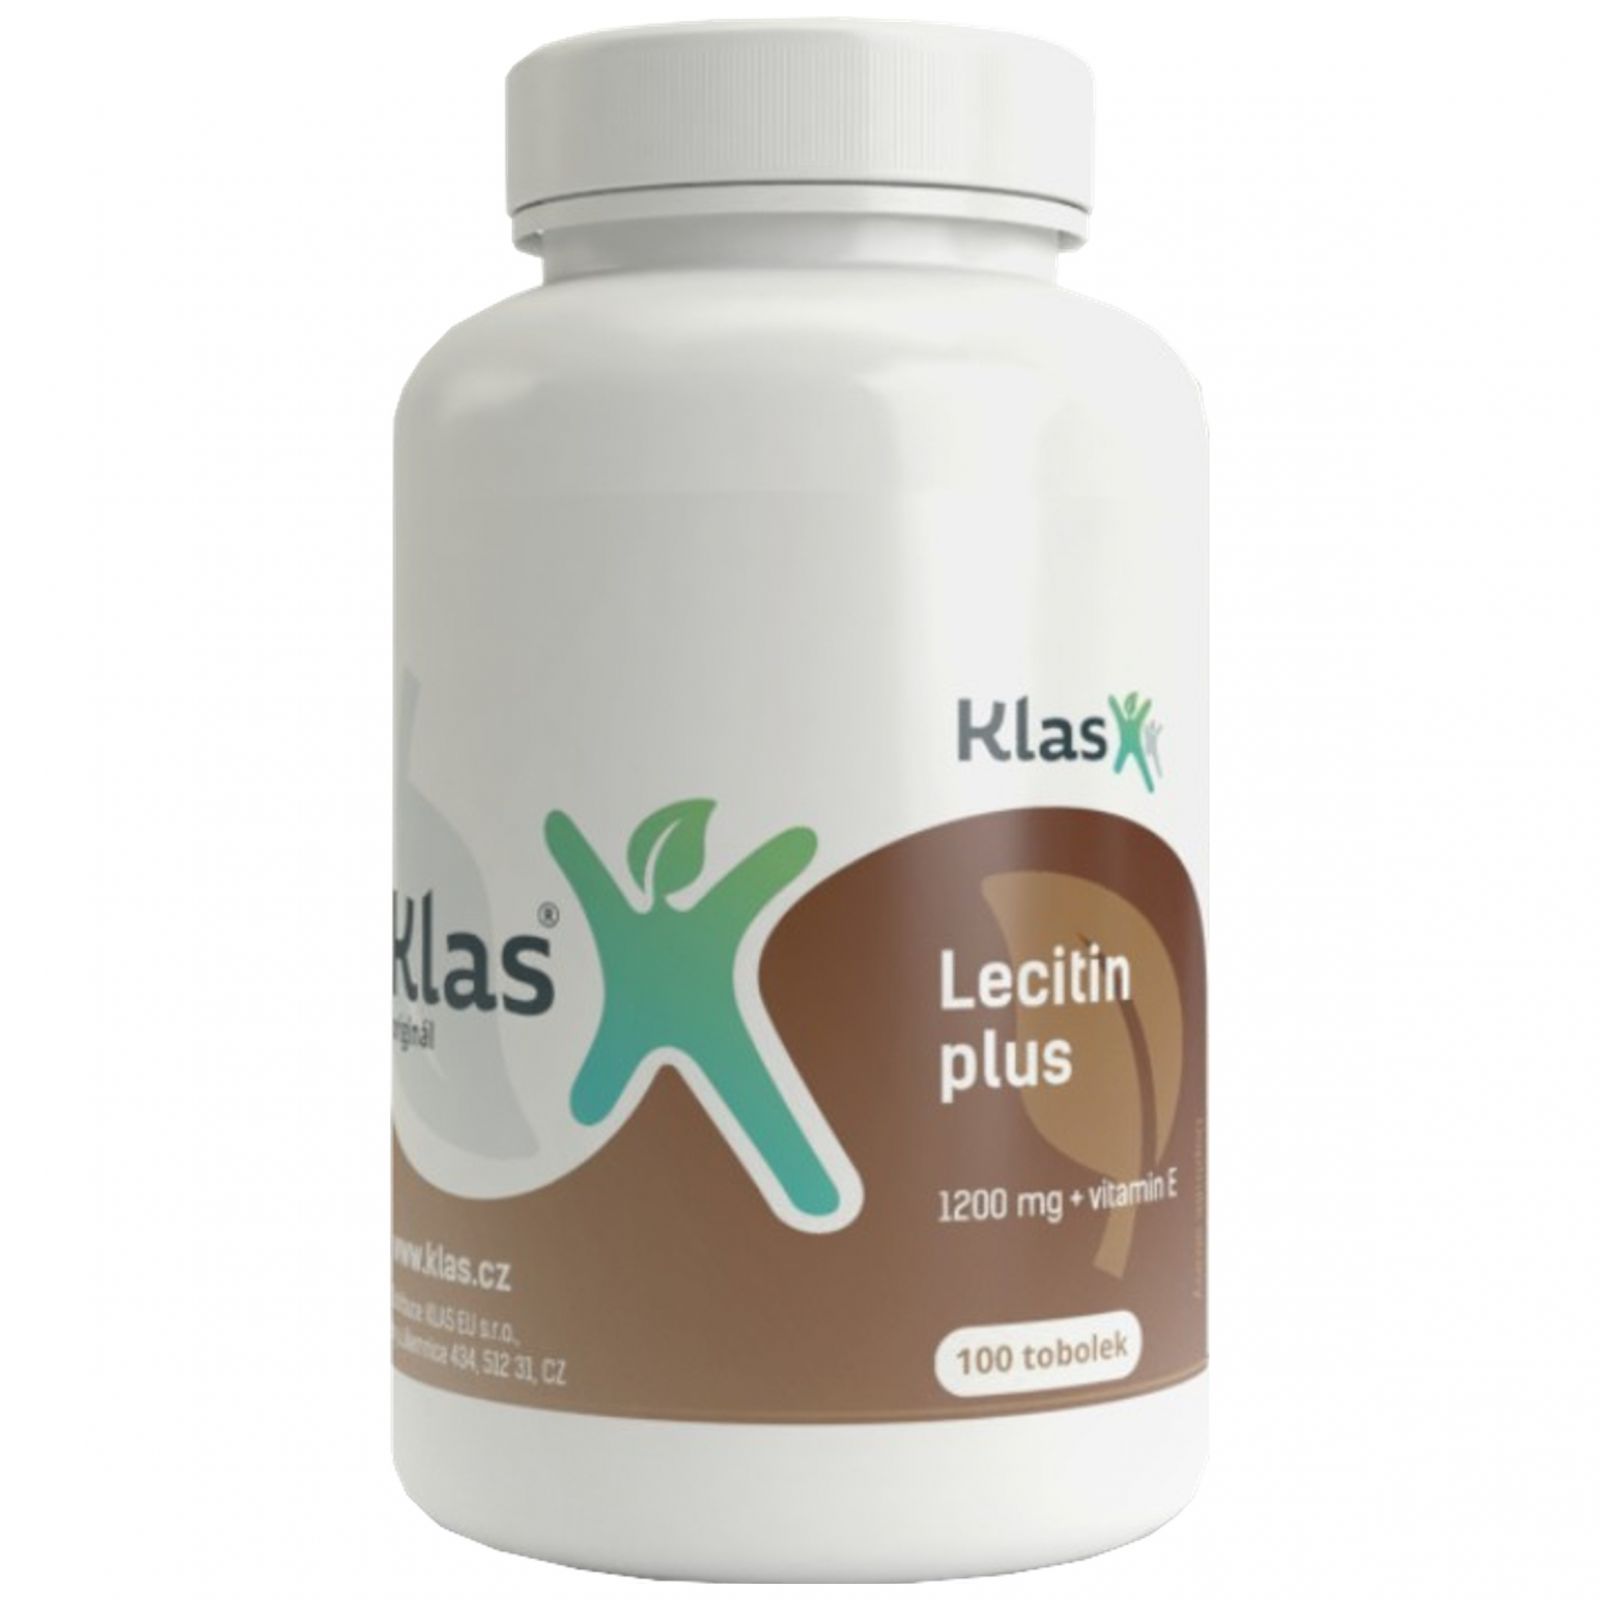 Klas Lecitin plus 1200 mg + vitamin E - 100 tobolek